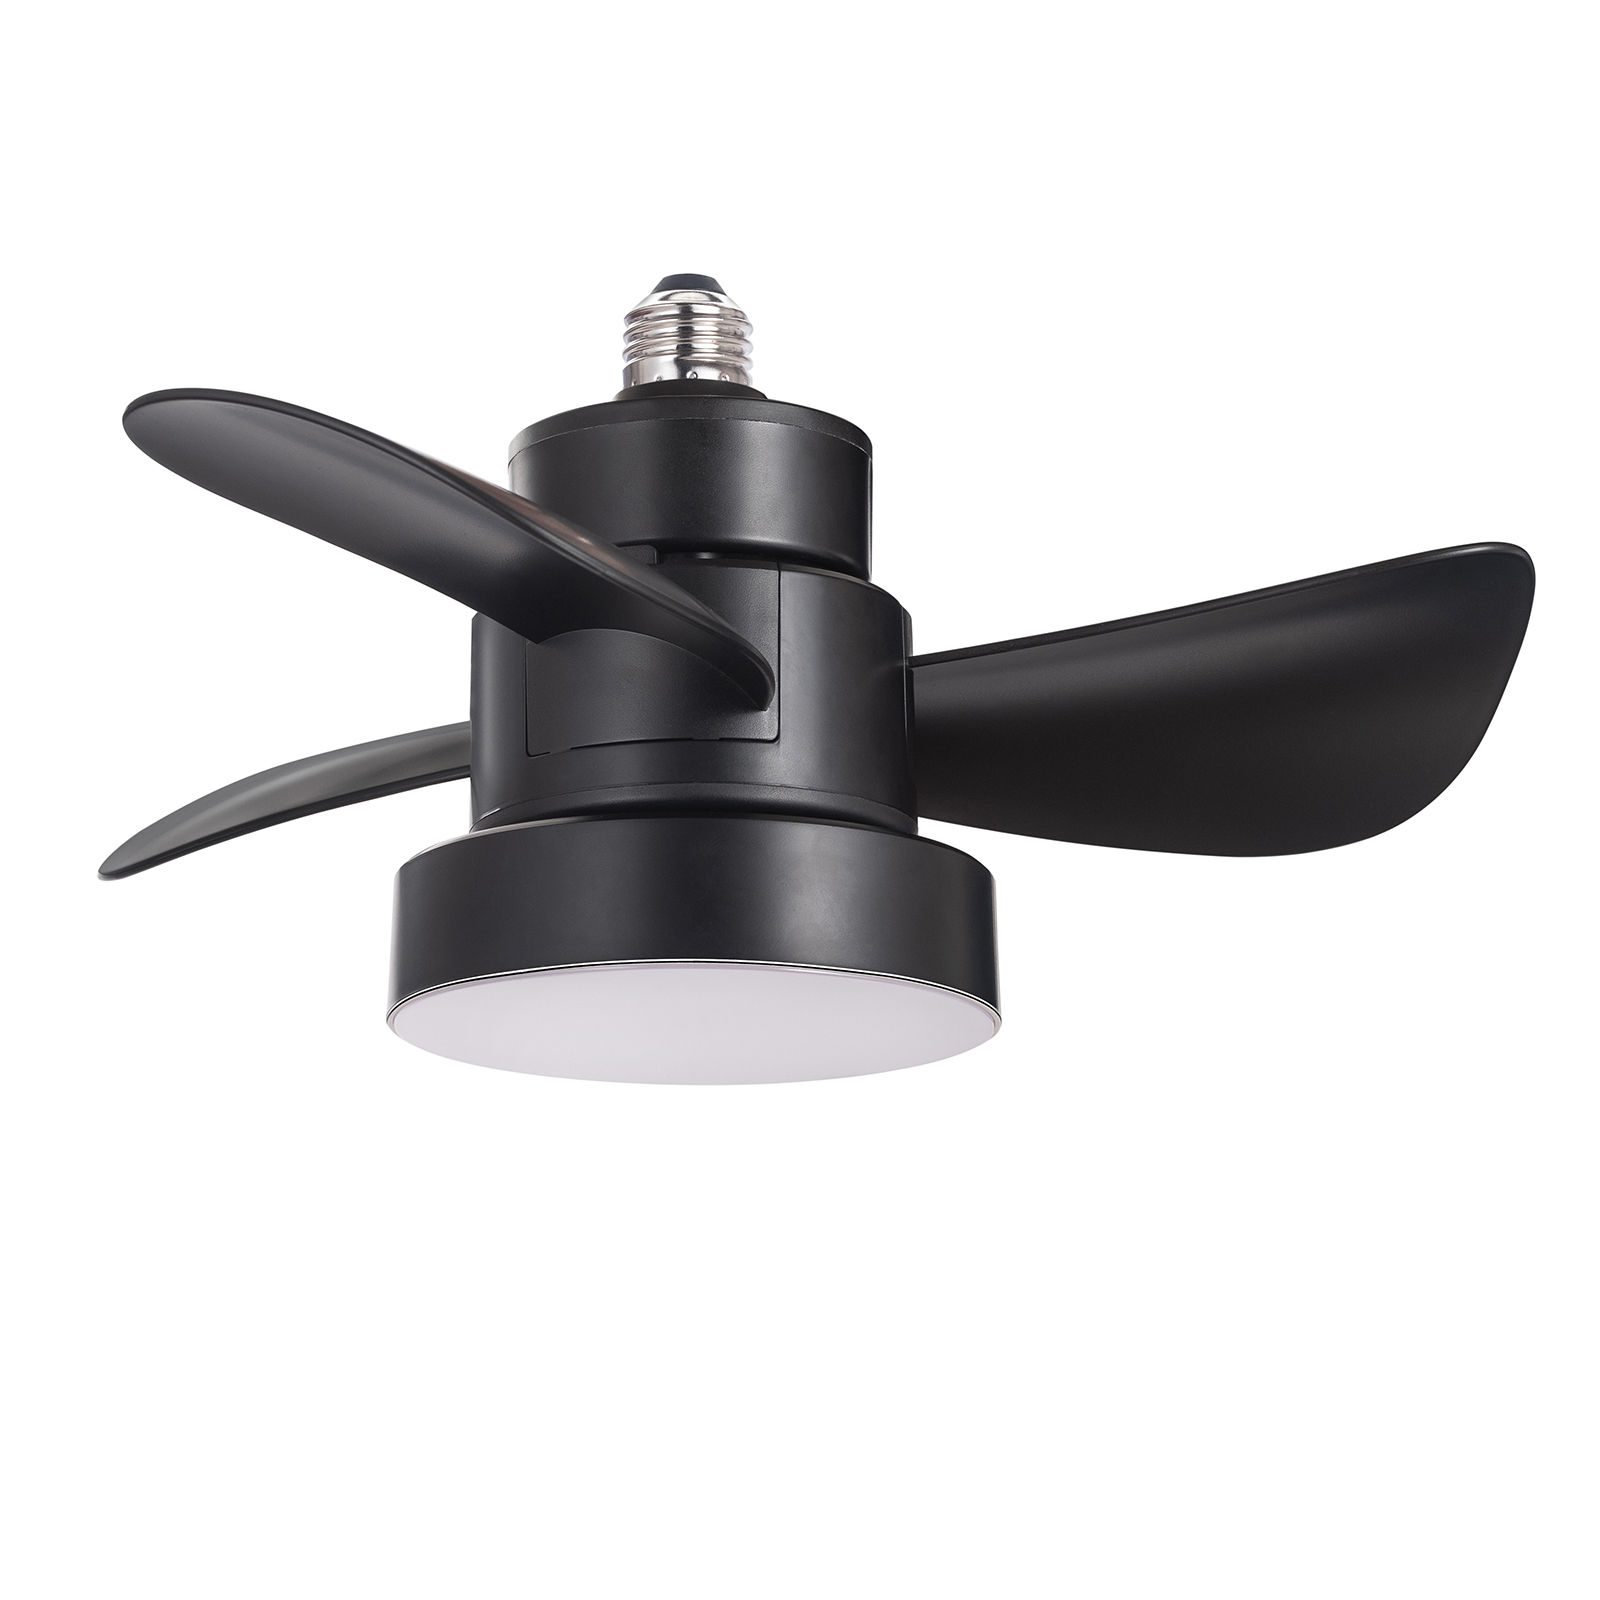 LED fan lamp private model E27 E26 lamp head blade is removable